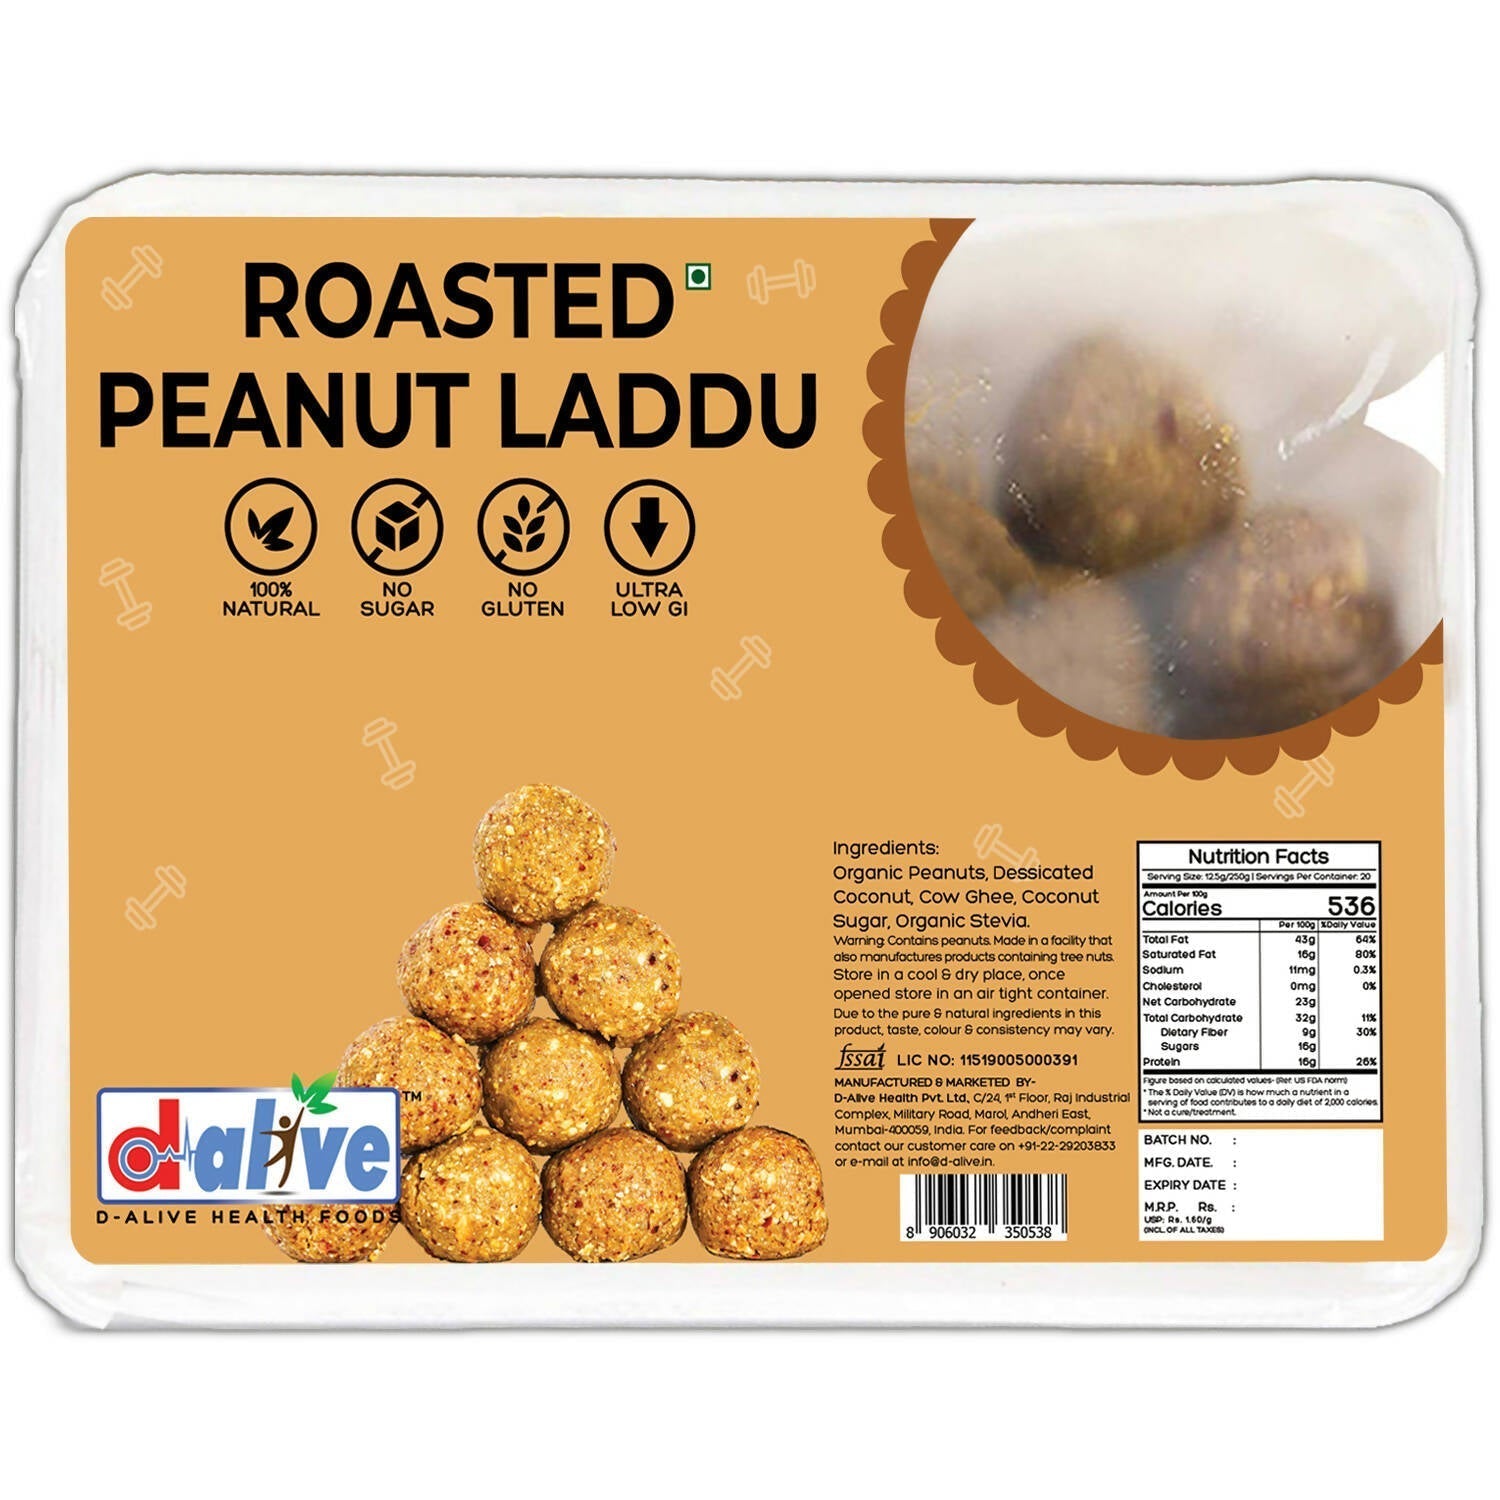 D-Alive Roasted Peanut Laddu - buy in USA, Australia, Canada